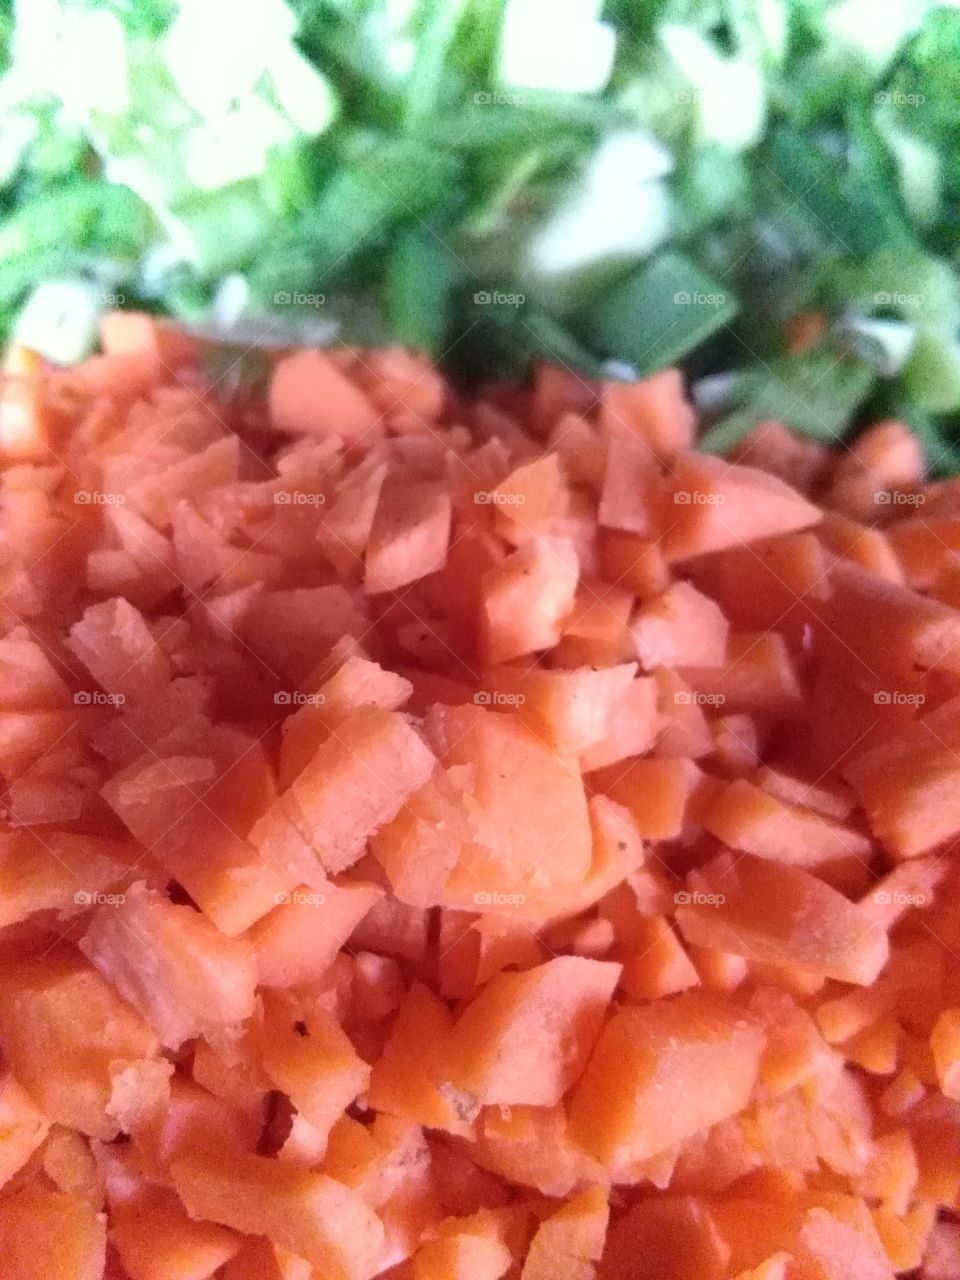 Carrots and leeks